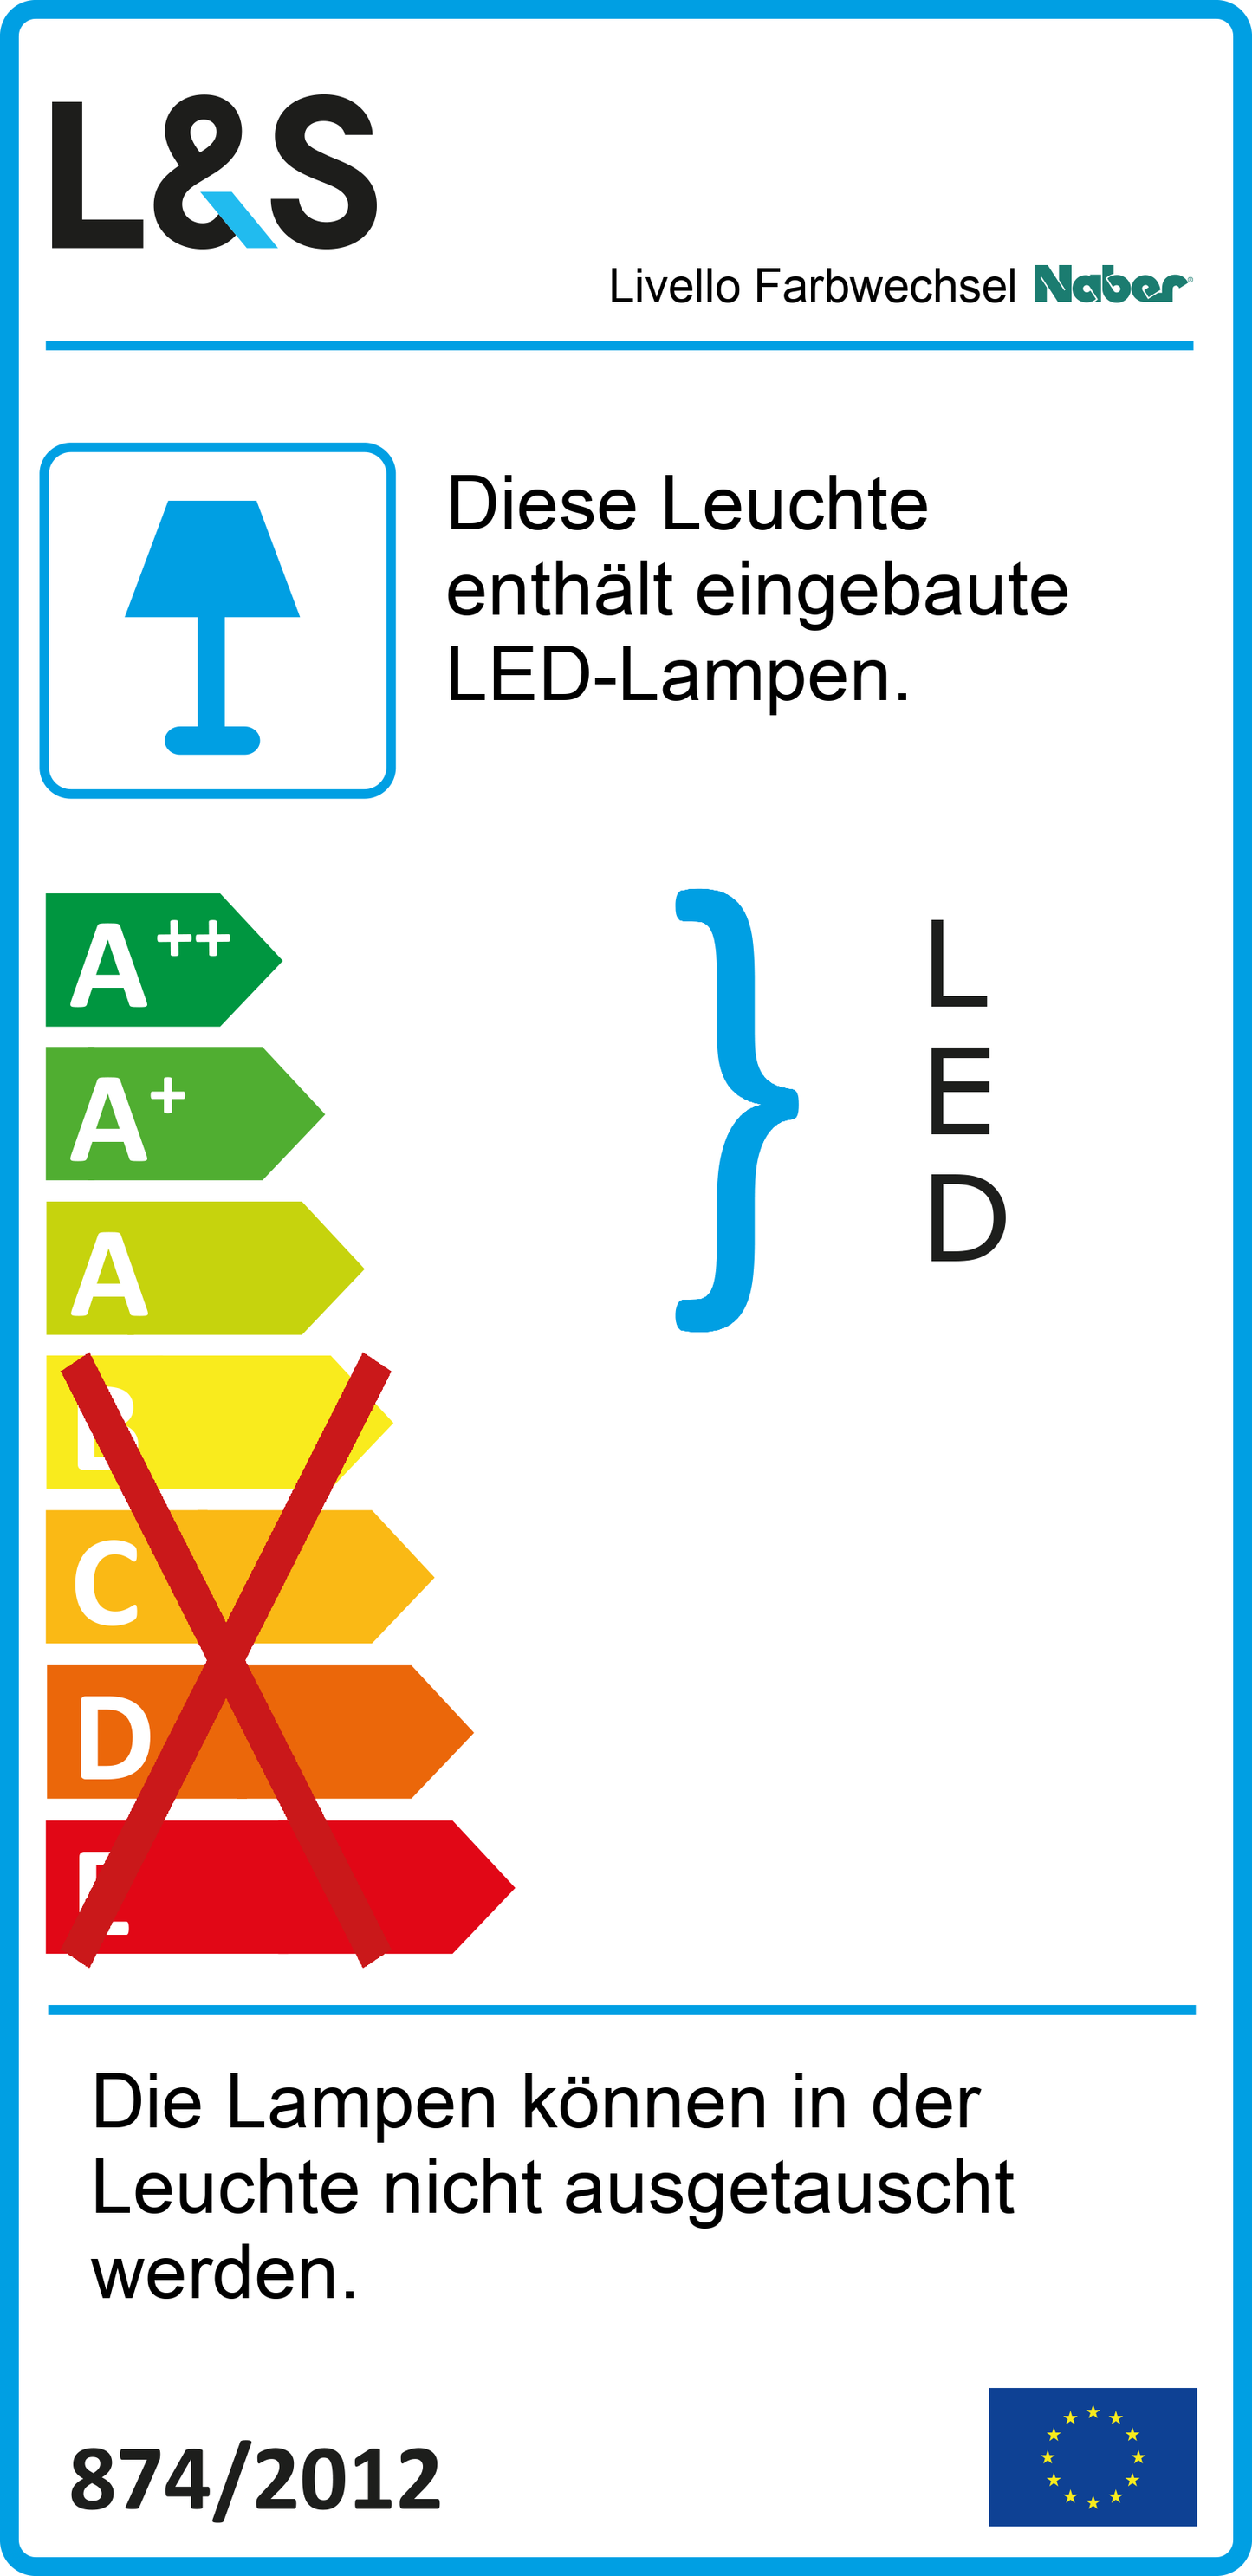 Livello Farbwechsel LED